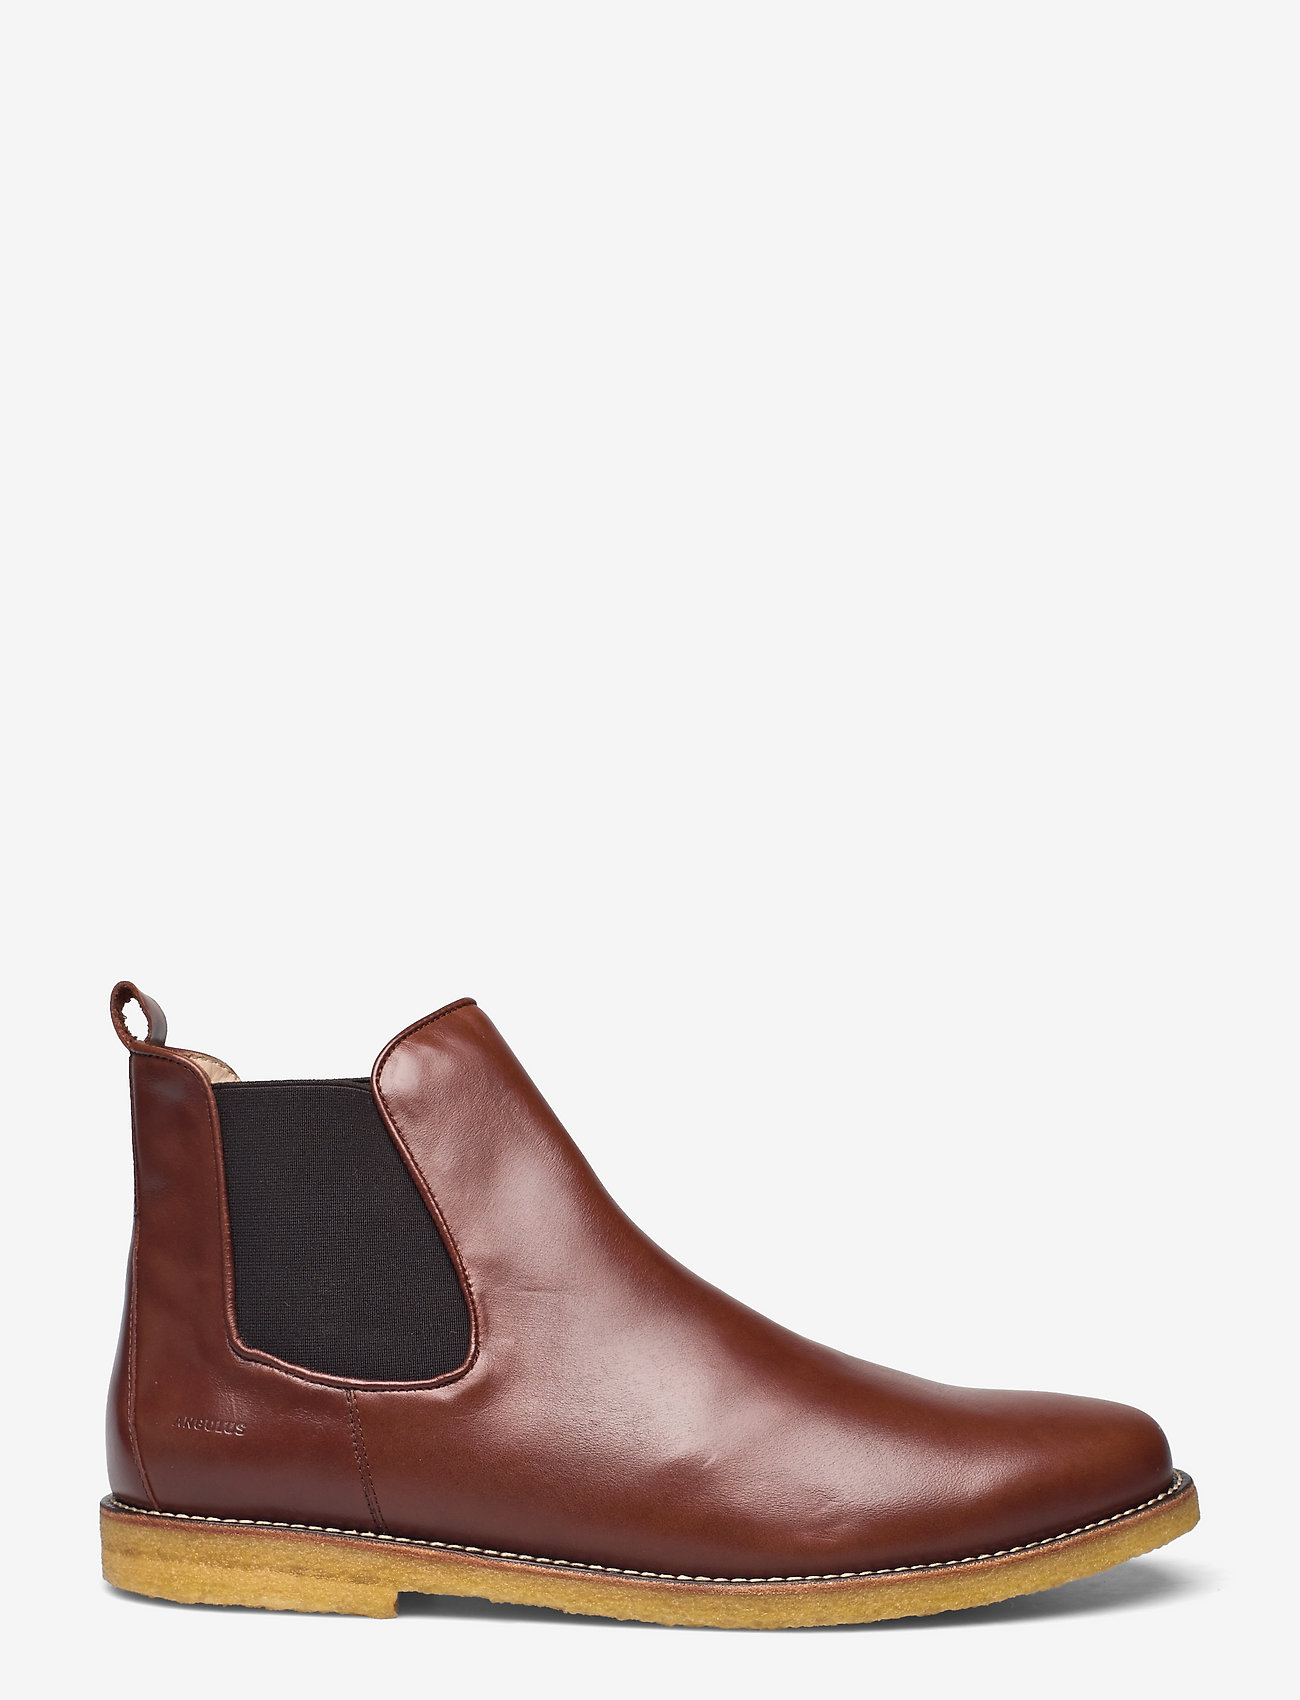 ANGULUS - Booties - flat - with elastic - chelsea boots - 1837/002 brown/dark brown - 1